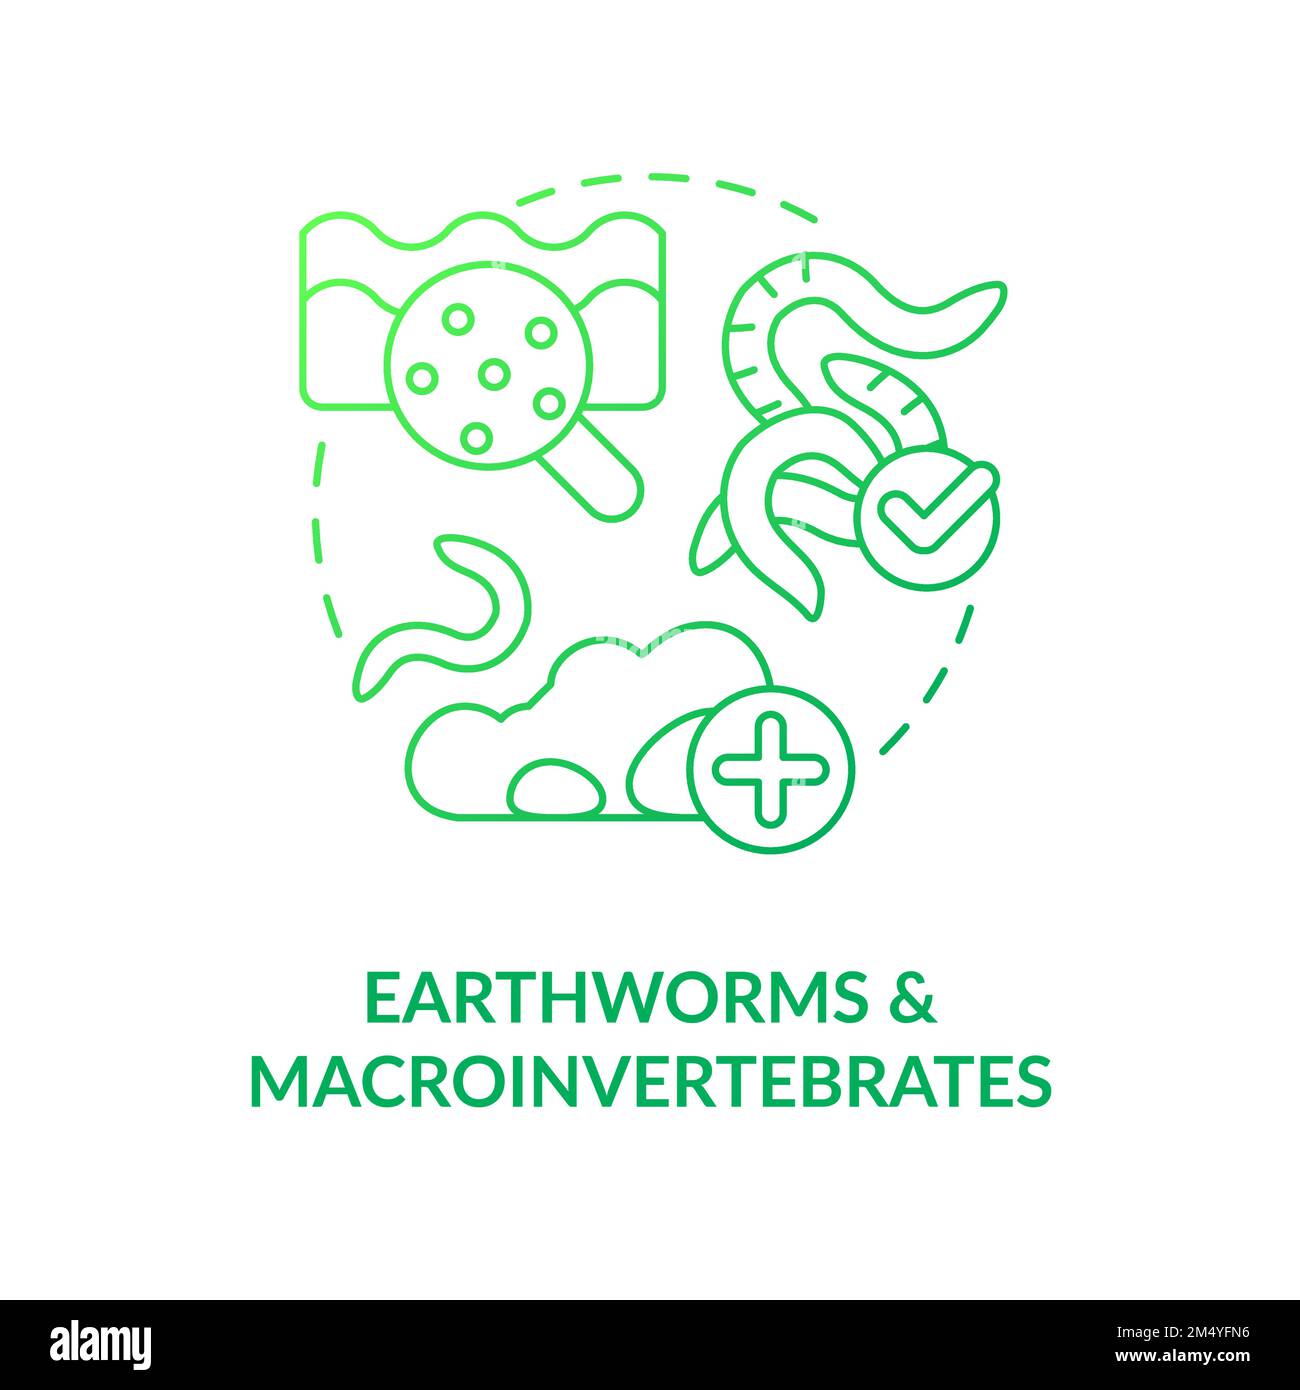 Earthworms and macroinvertebrates green gradient concept icon Stock Vector